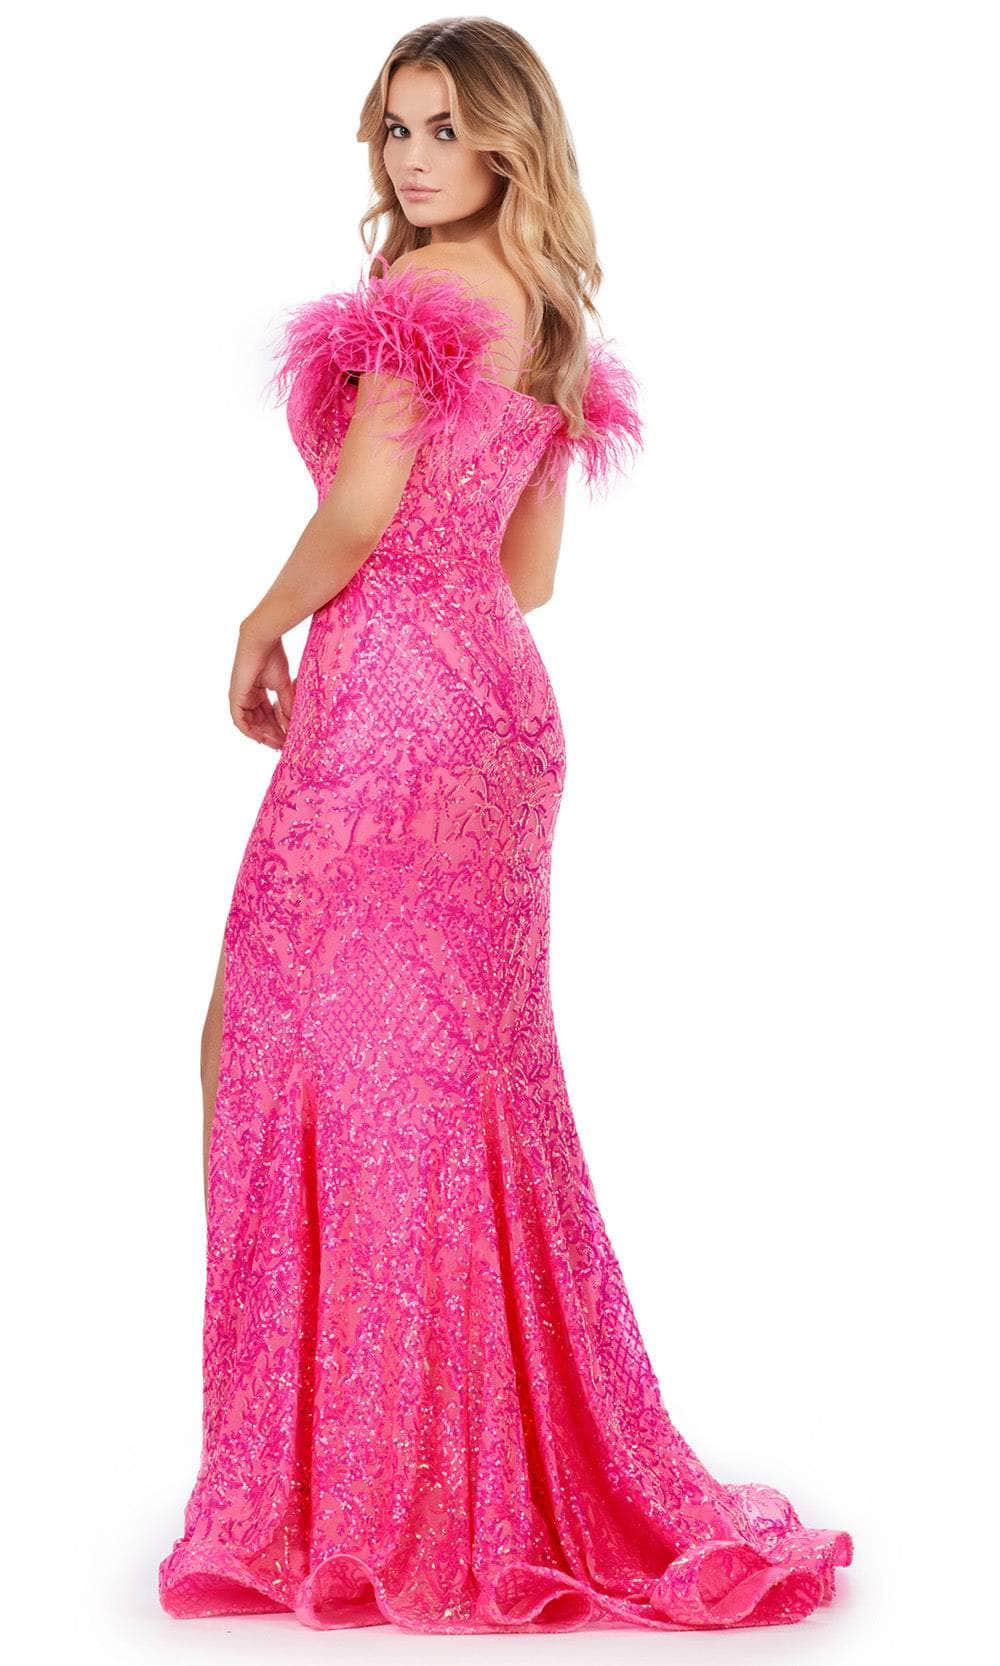 Ashley Lauren 11463 - Sequin Motif Prom Dress Prom Dresses